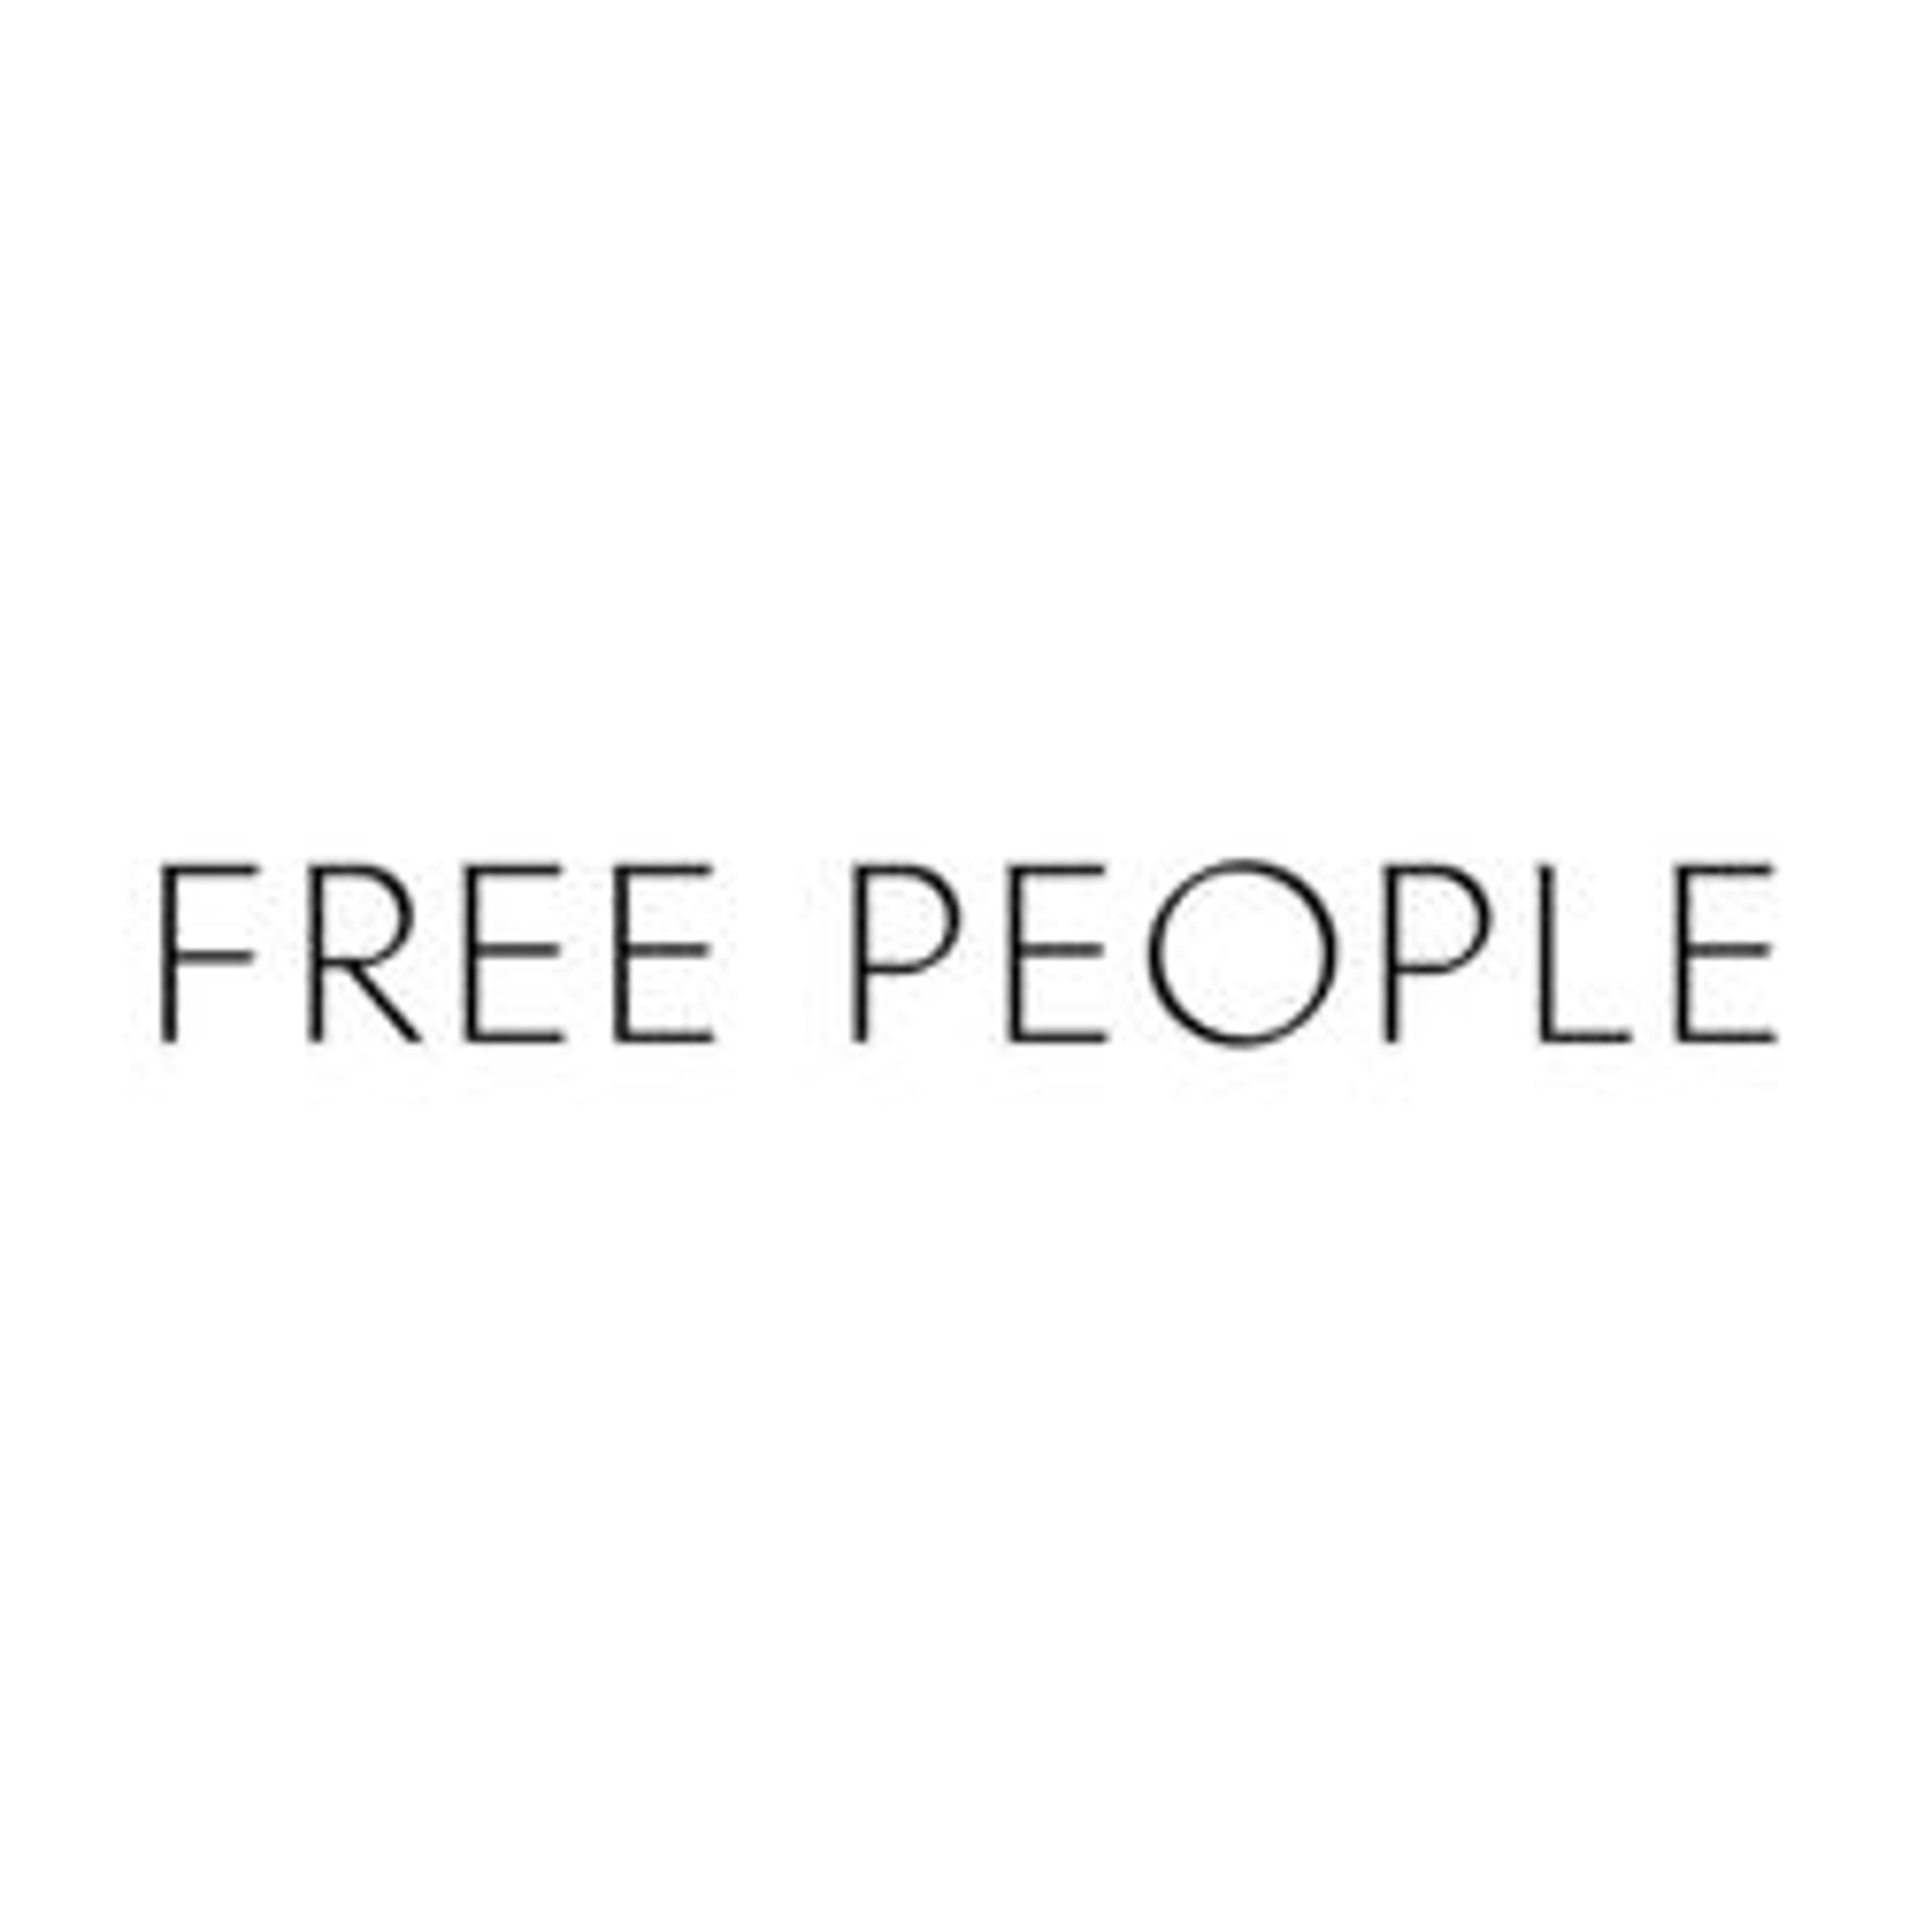  Free People 